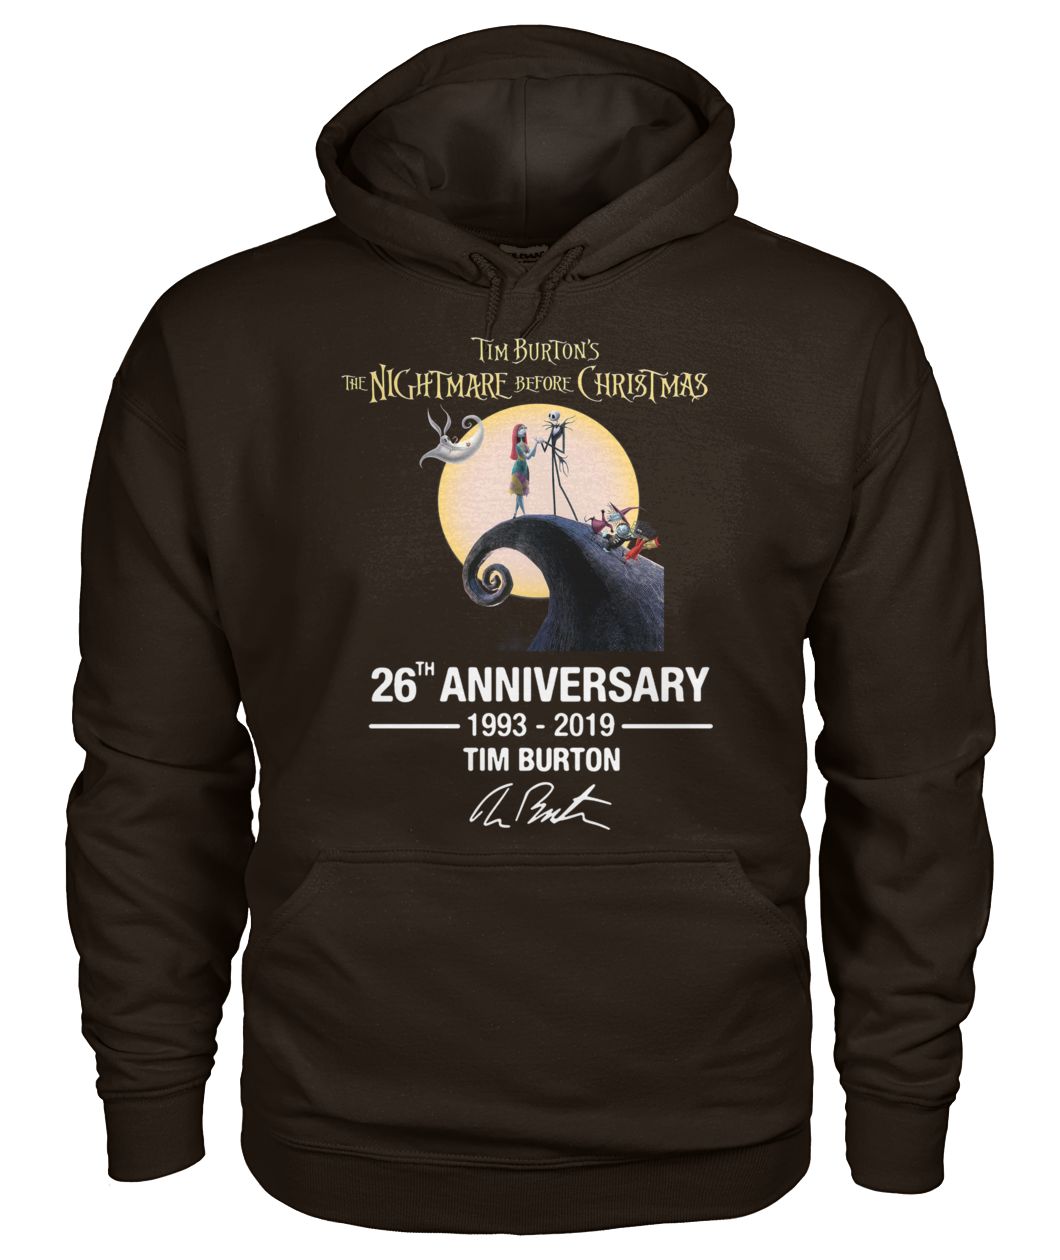 Tim burton's the nightmare before christmas 26th anniversary 1993 2019 signature gildan hoodie